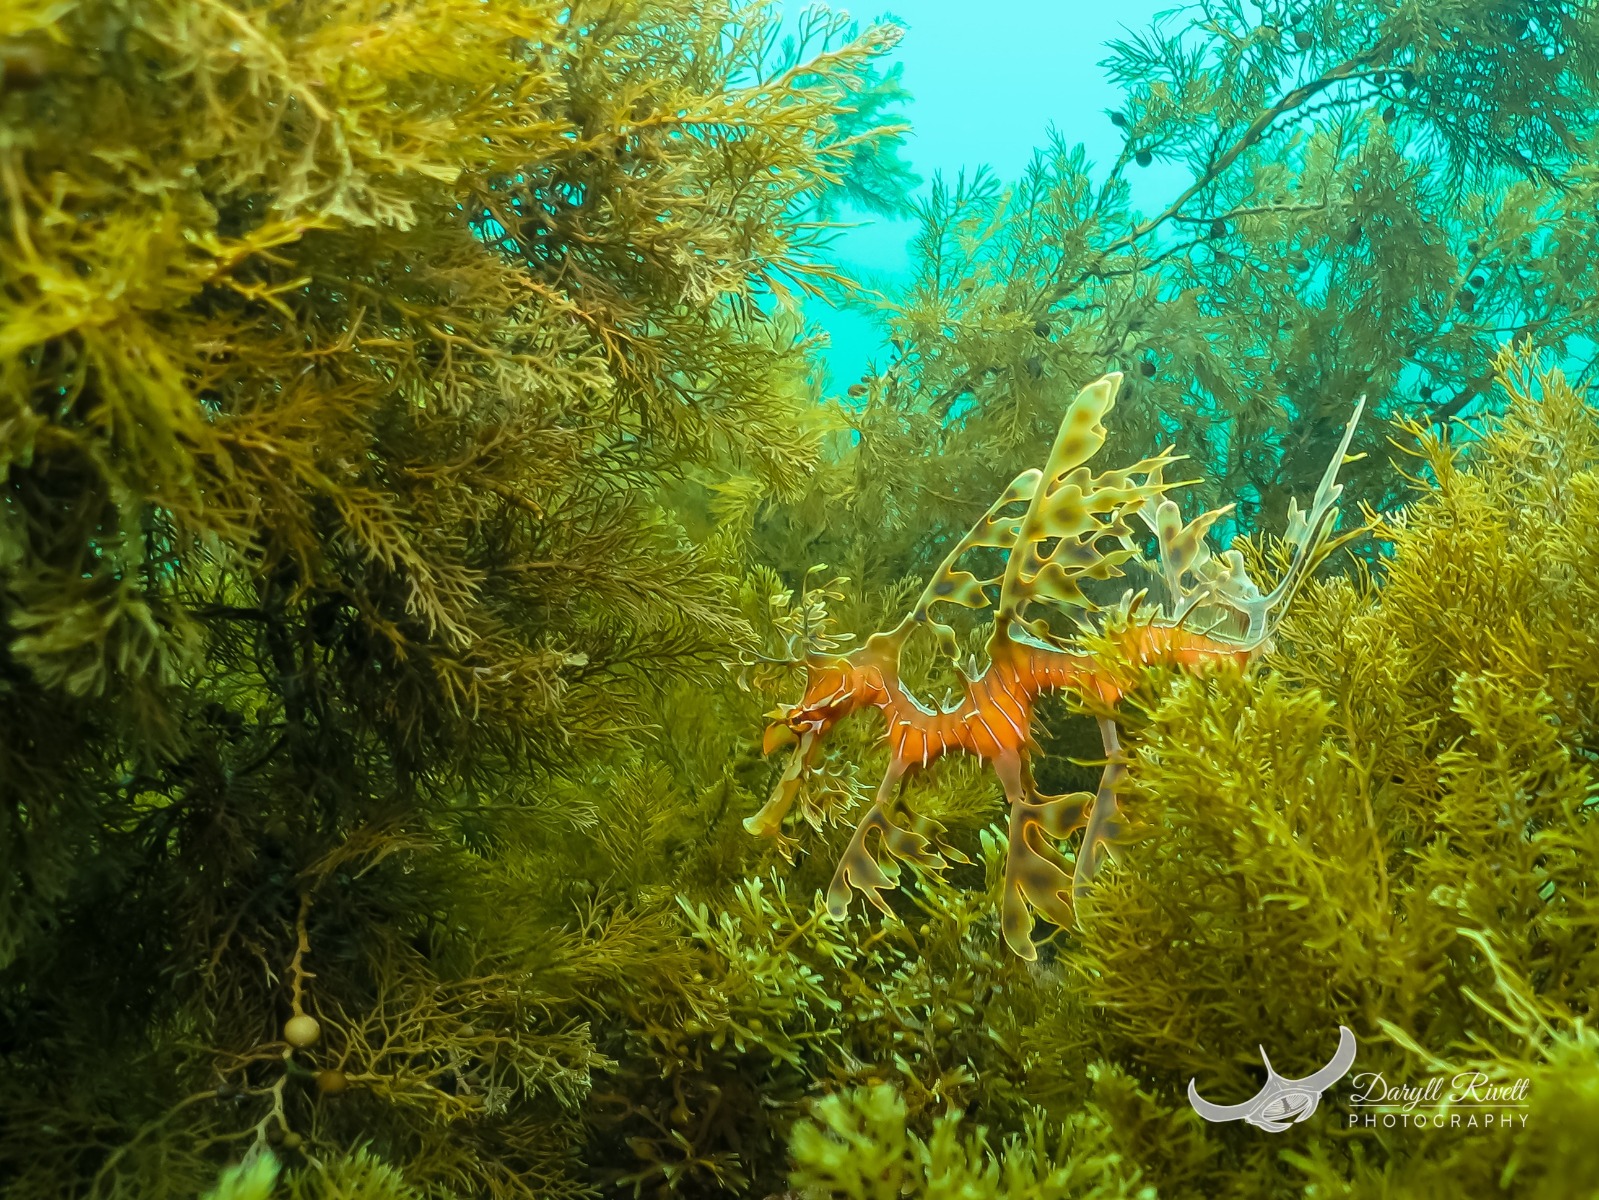 Leafy Seadragons are camouflage experts. Rapid Bay Jetty, Fleurieu Peninsula, South Australia